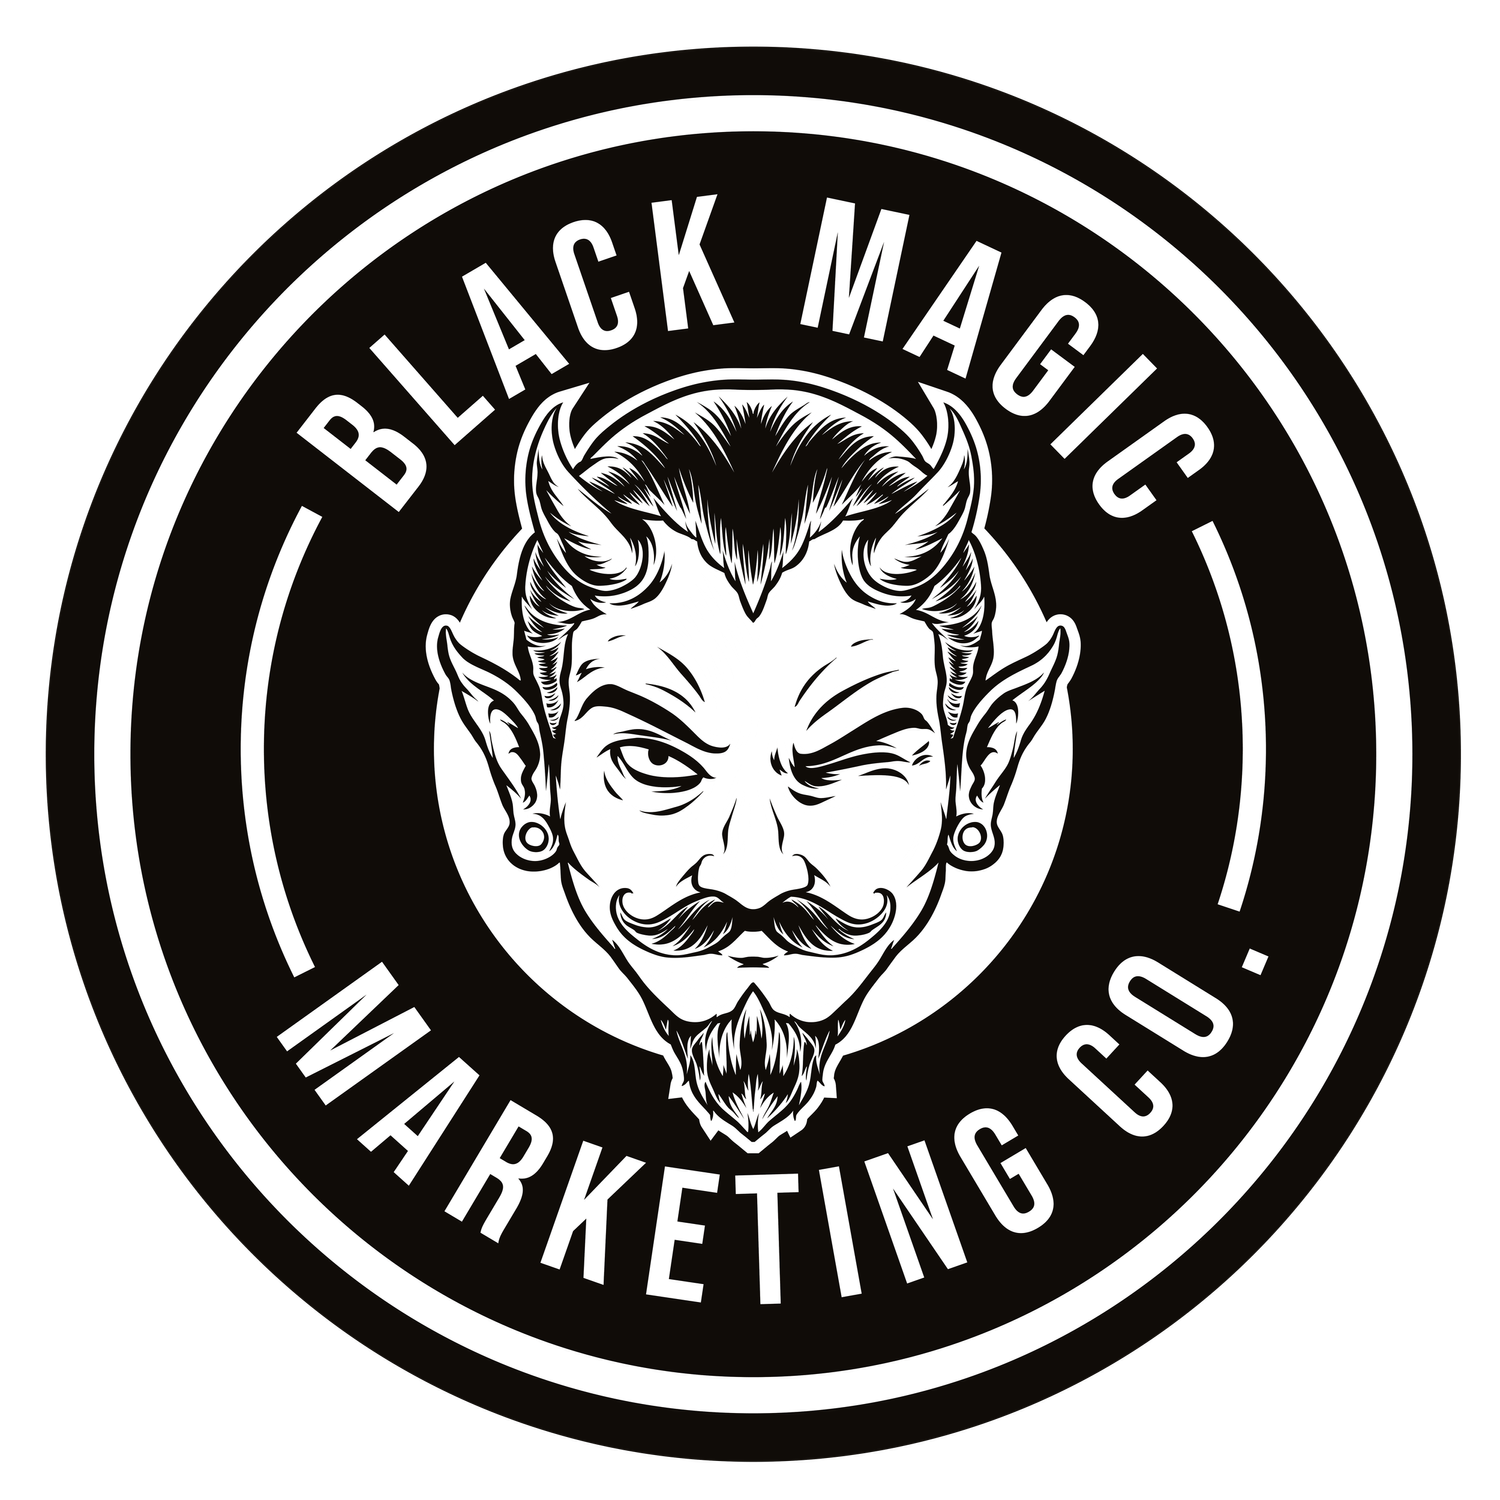 Black Magic Marketing